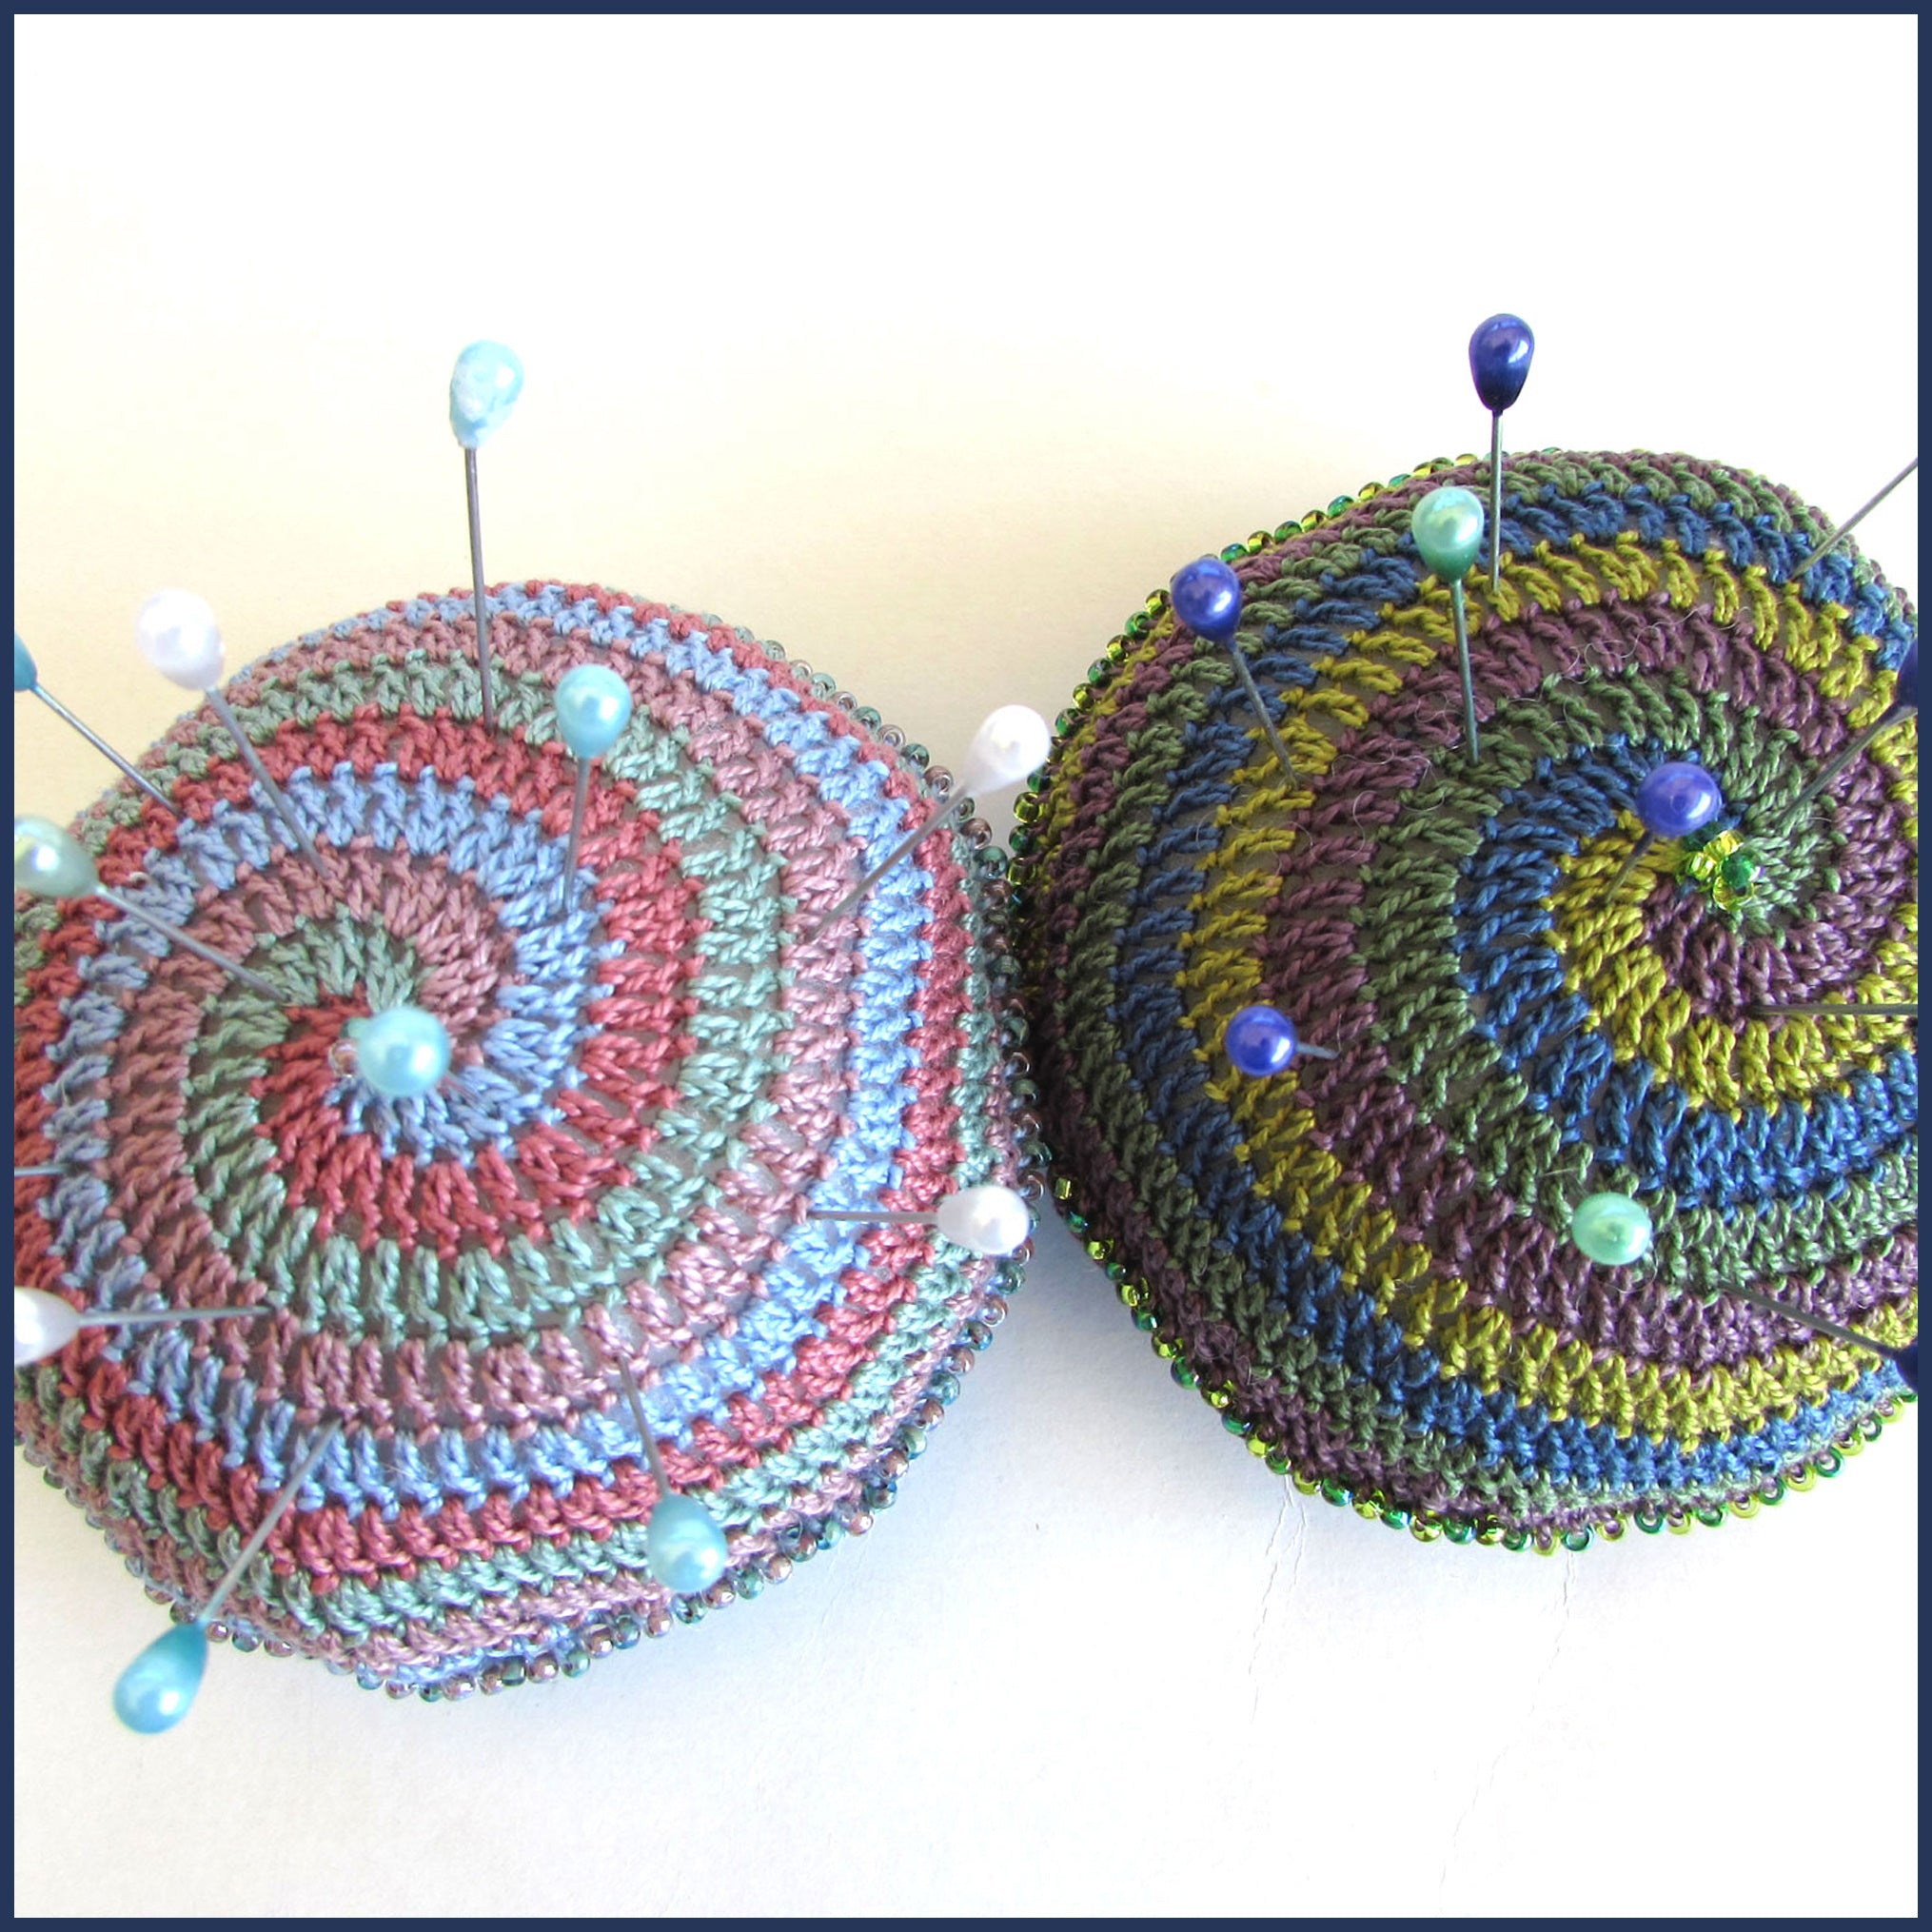 Pinwheel pin cushion - free crochet pattern from Blue Ammonite Designs